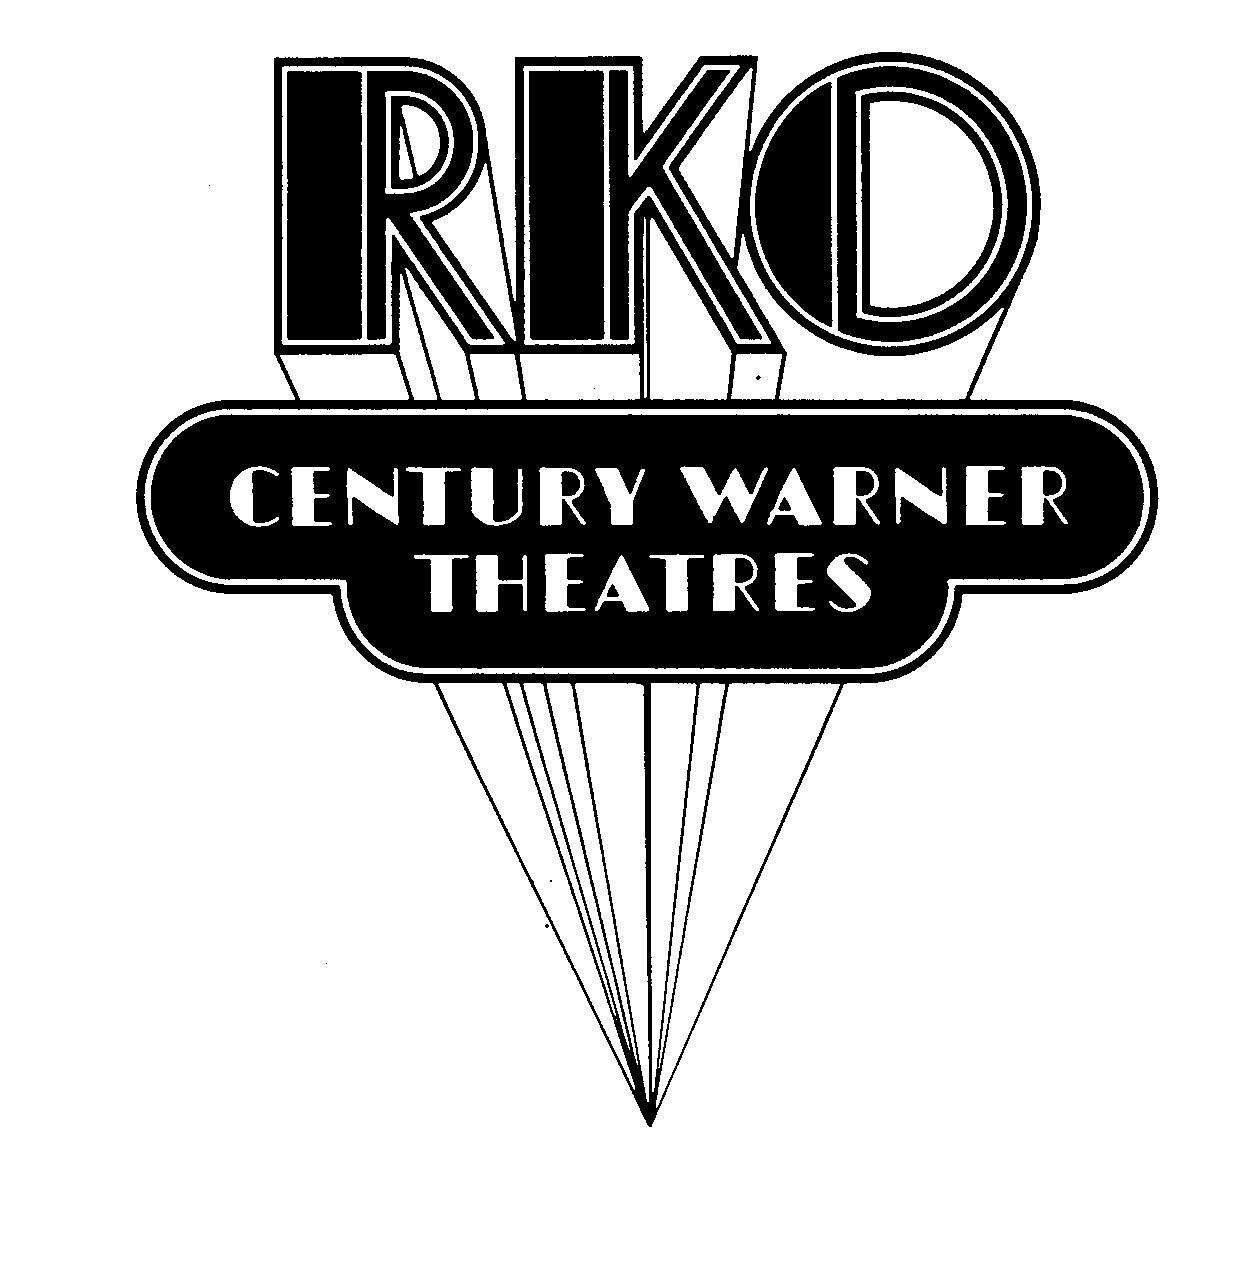 RKO CENTURY WARNER THEATRES